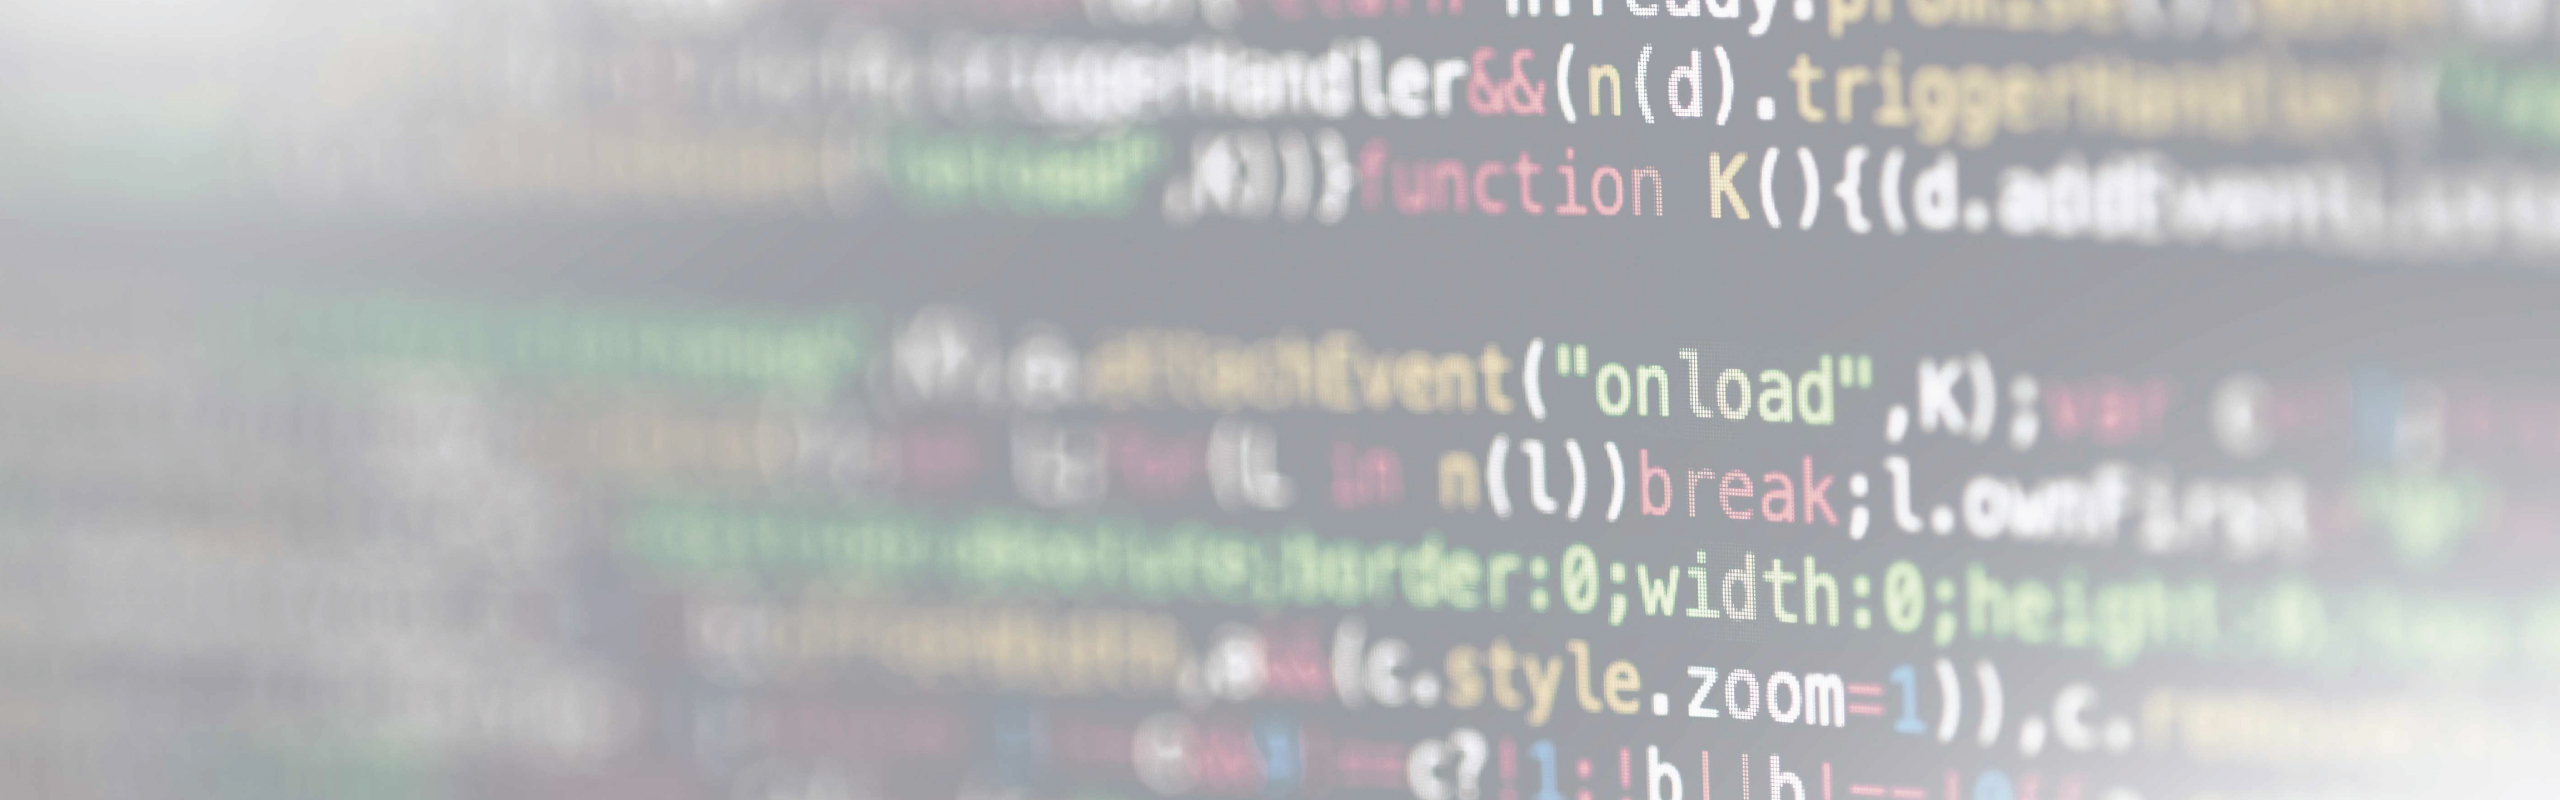 Web development code on a screen